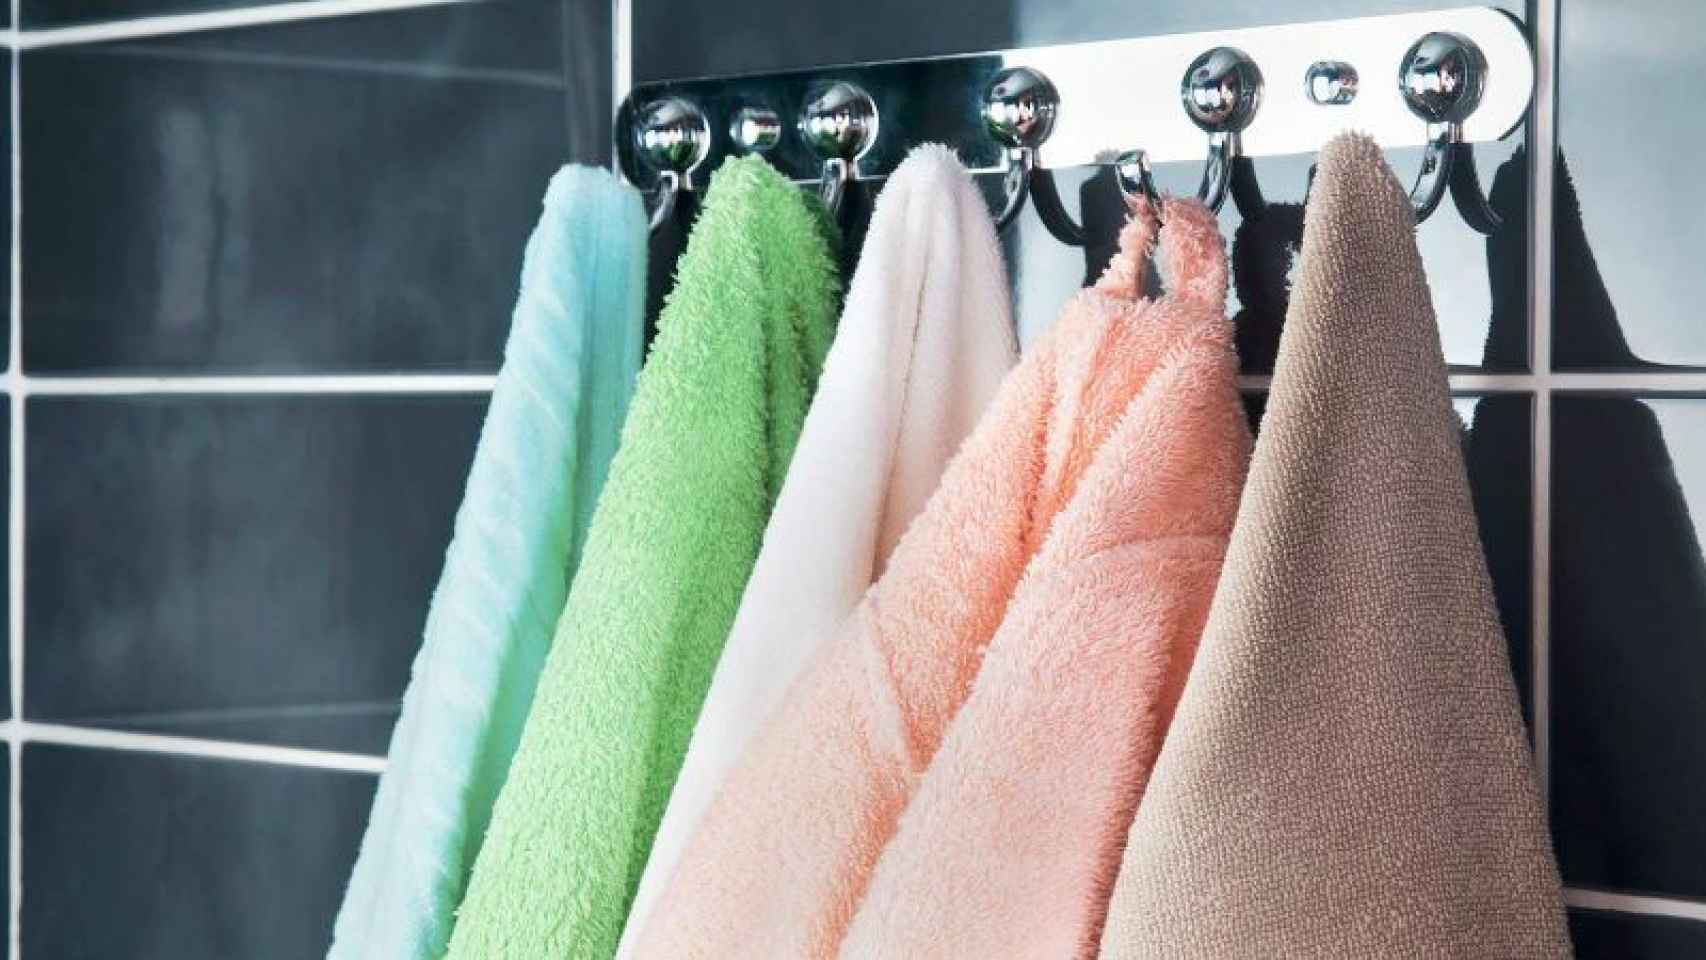 toallas